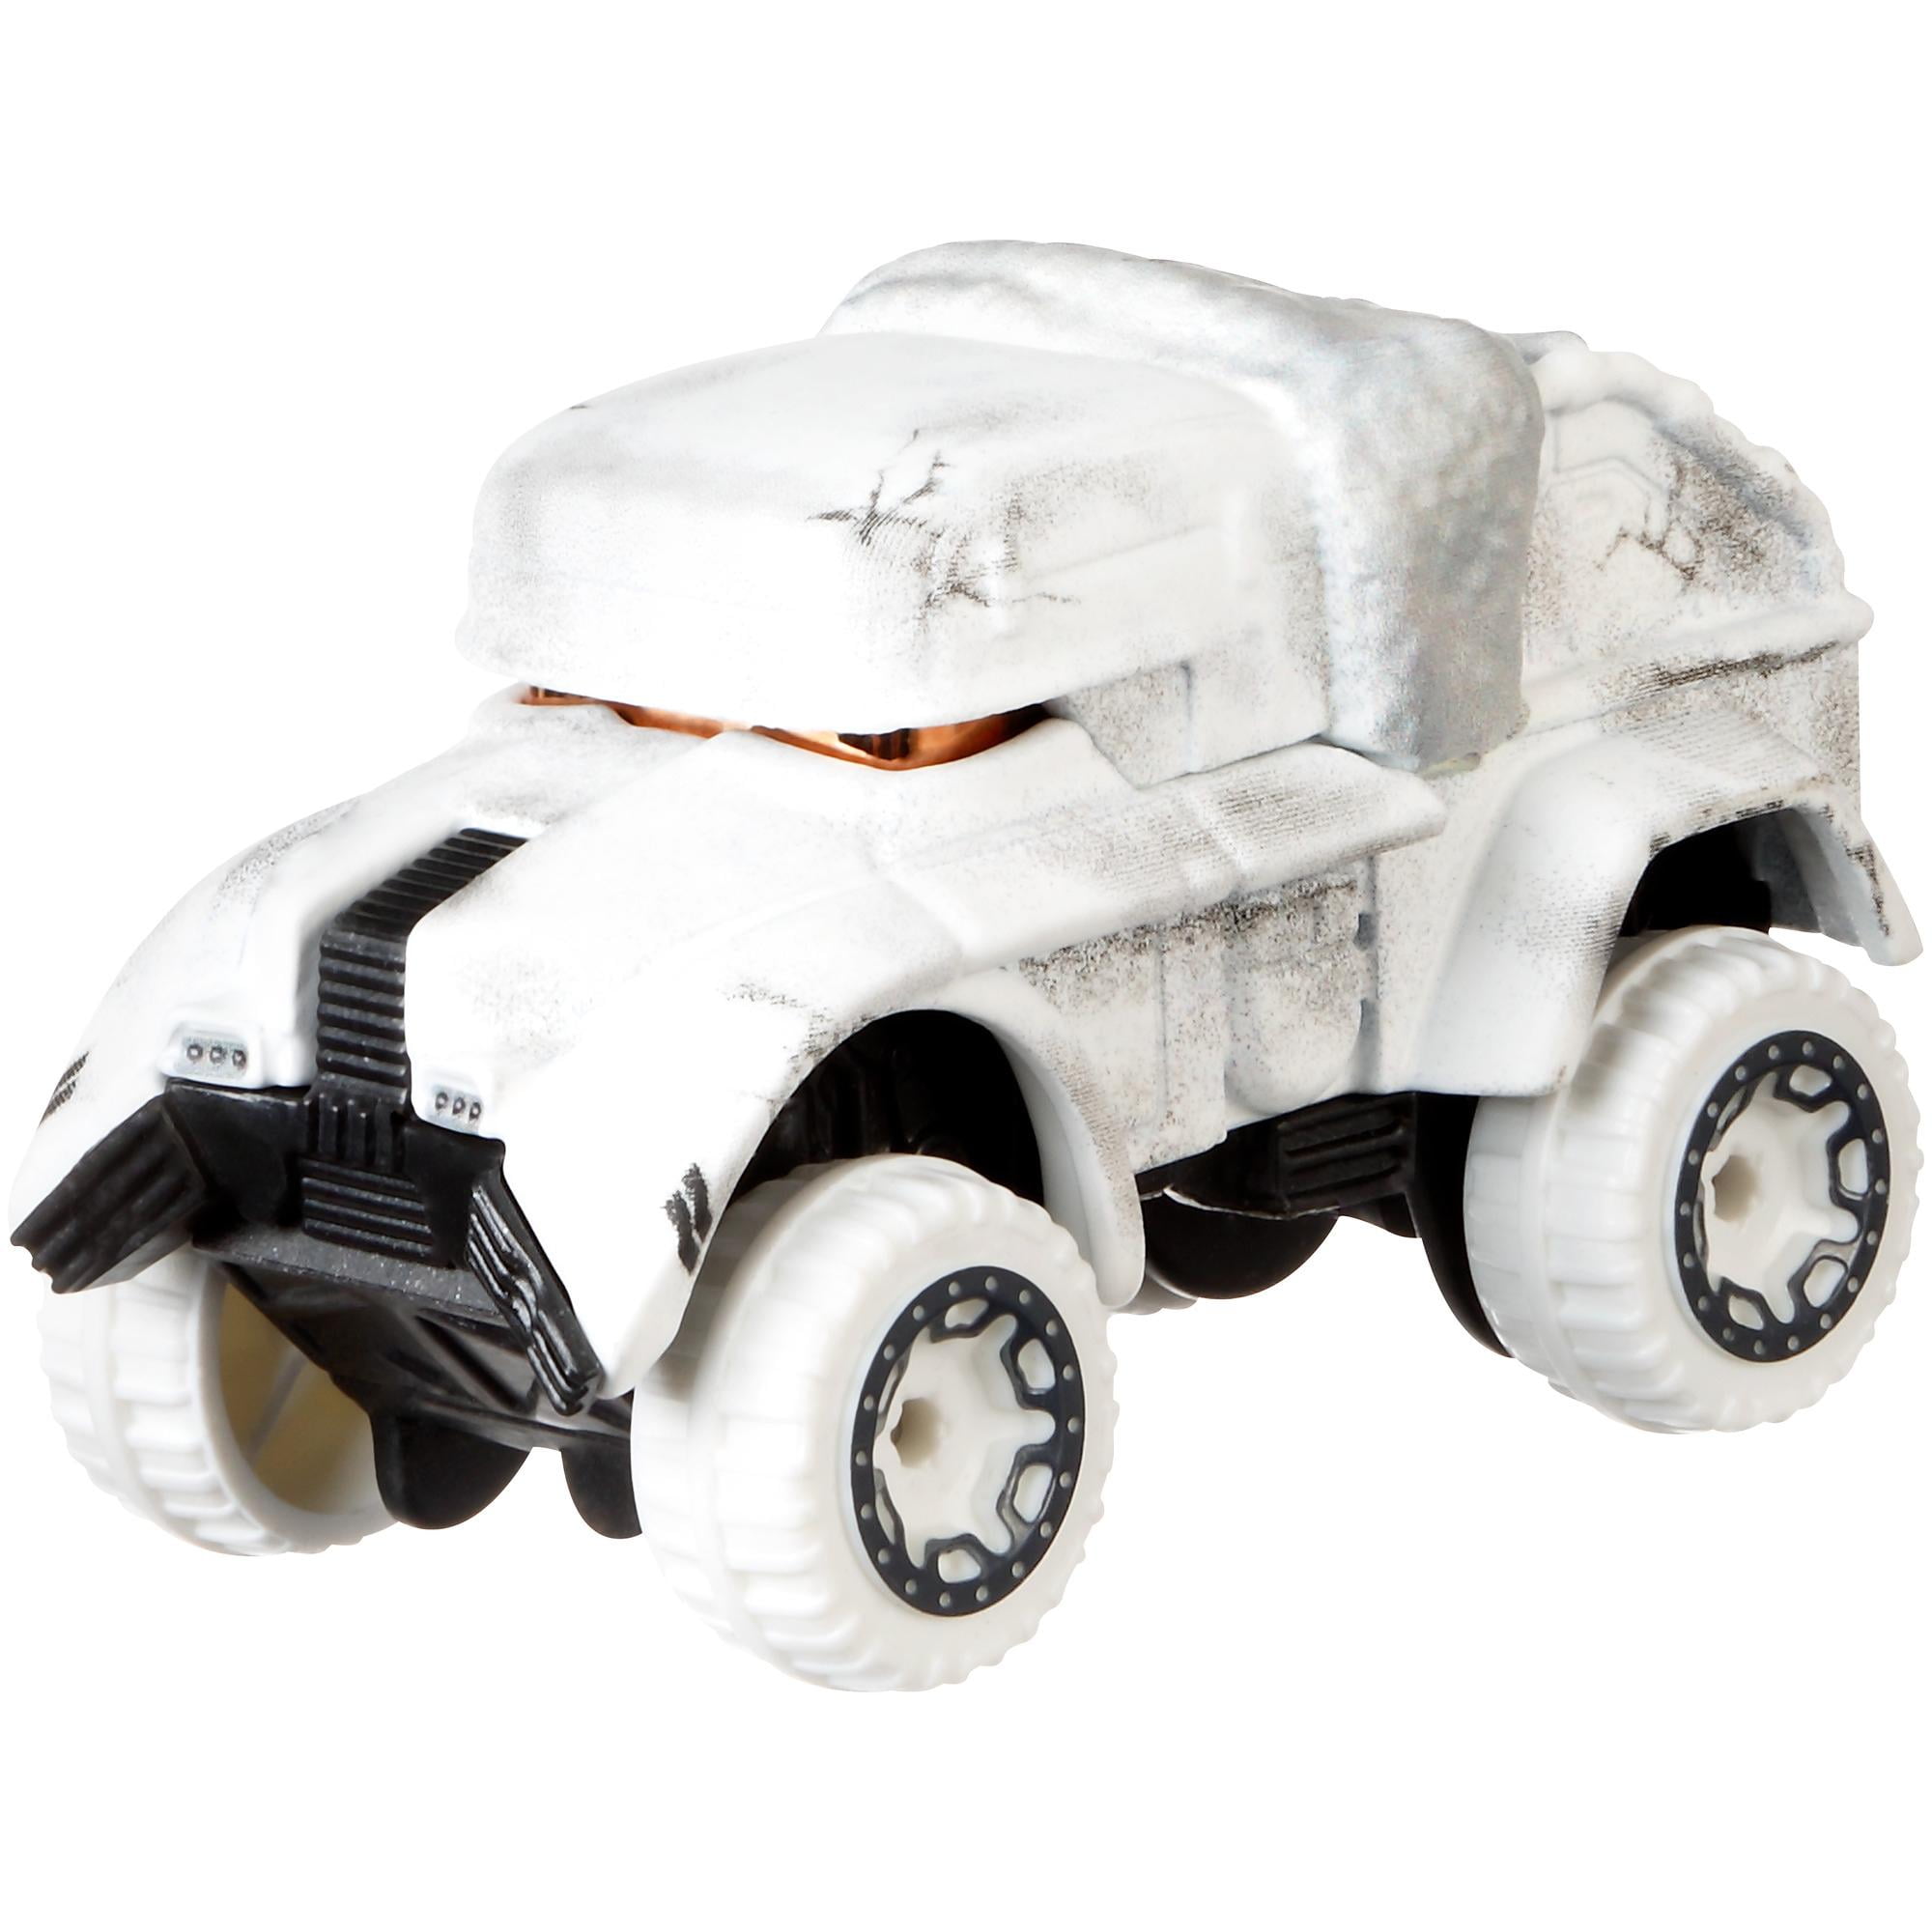 Hot Wheels Star Wars All-Terrain Darth Vader Vehicle Mattel FCY98